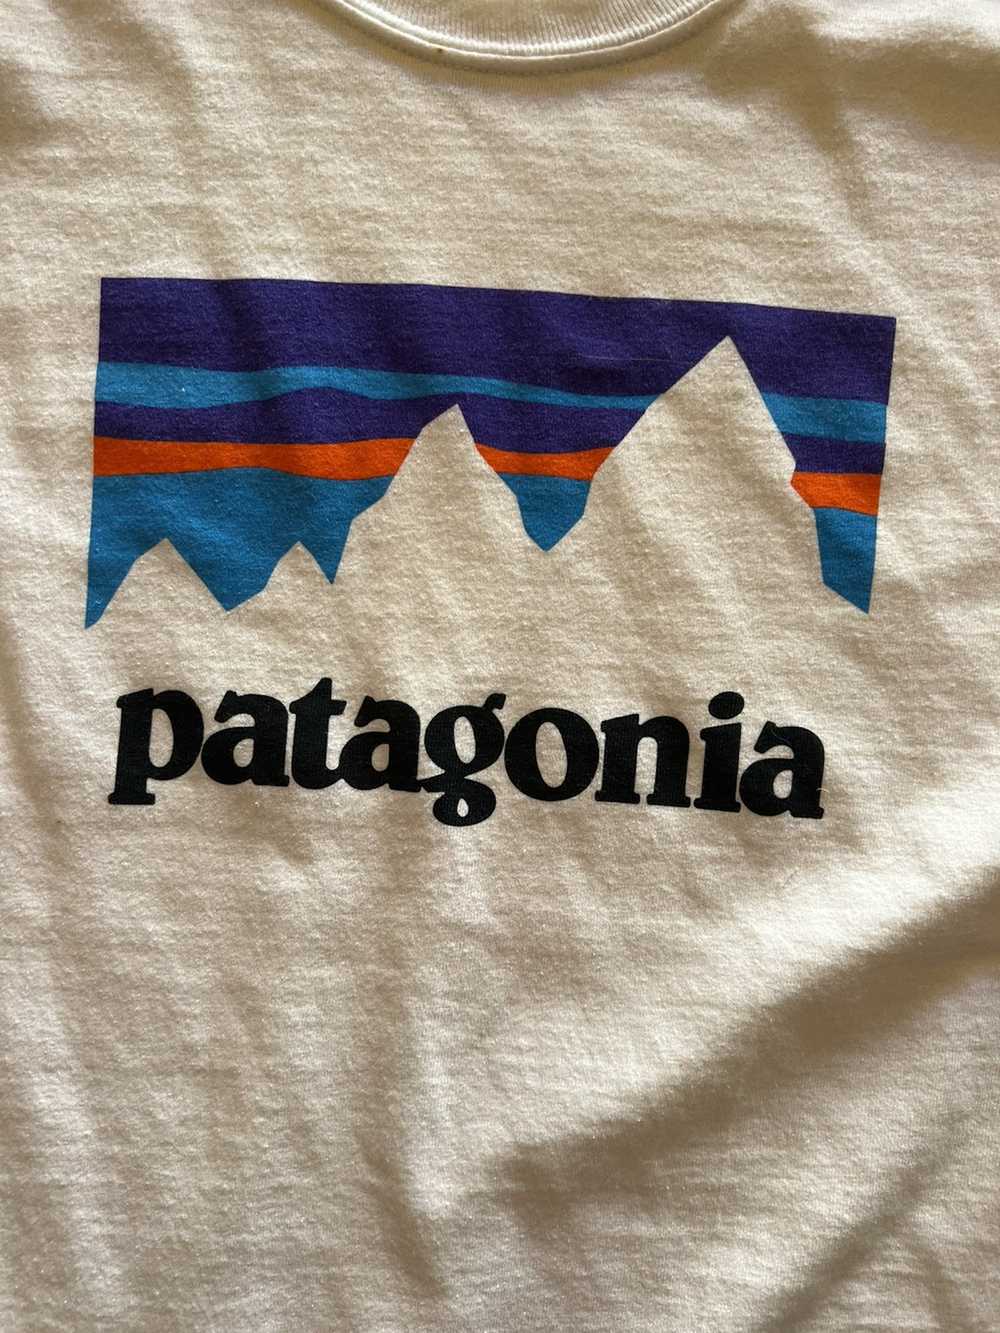 Patagonia Patagonia Longsleeve - image 2